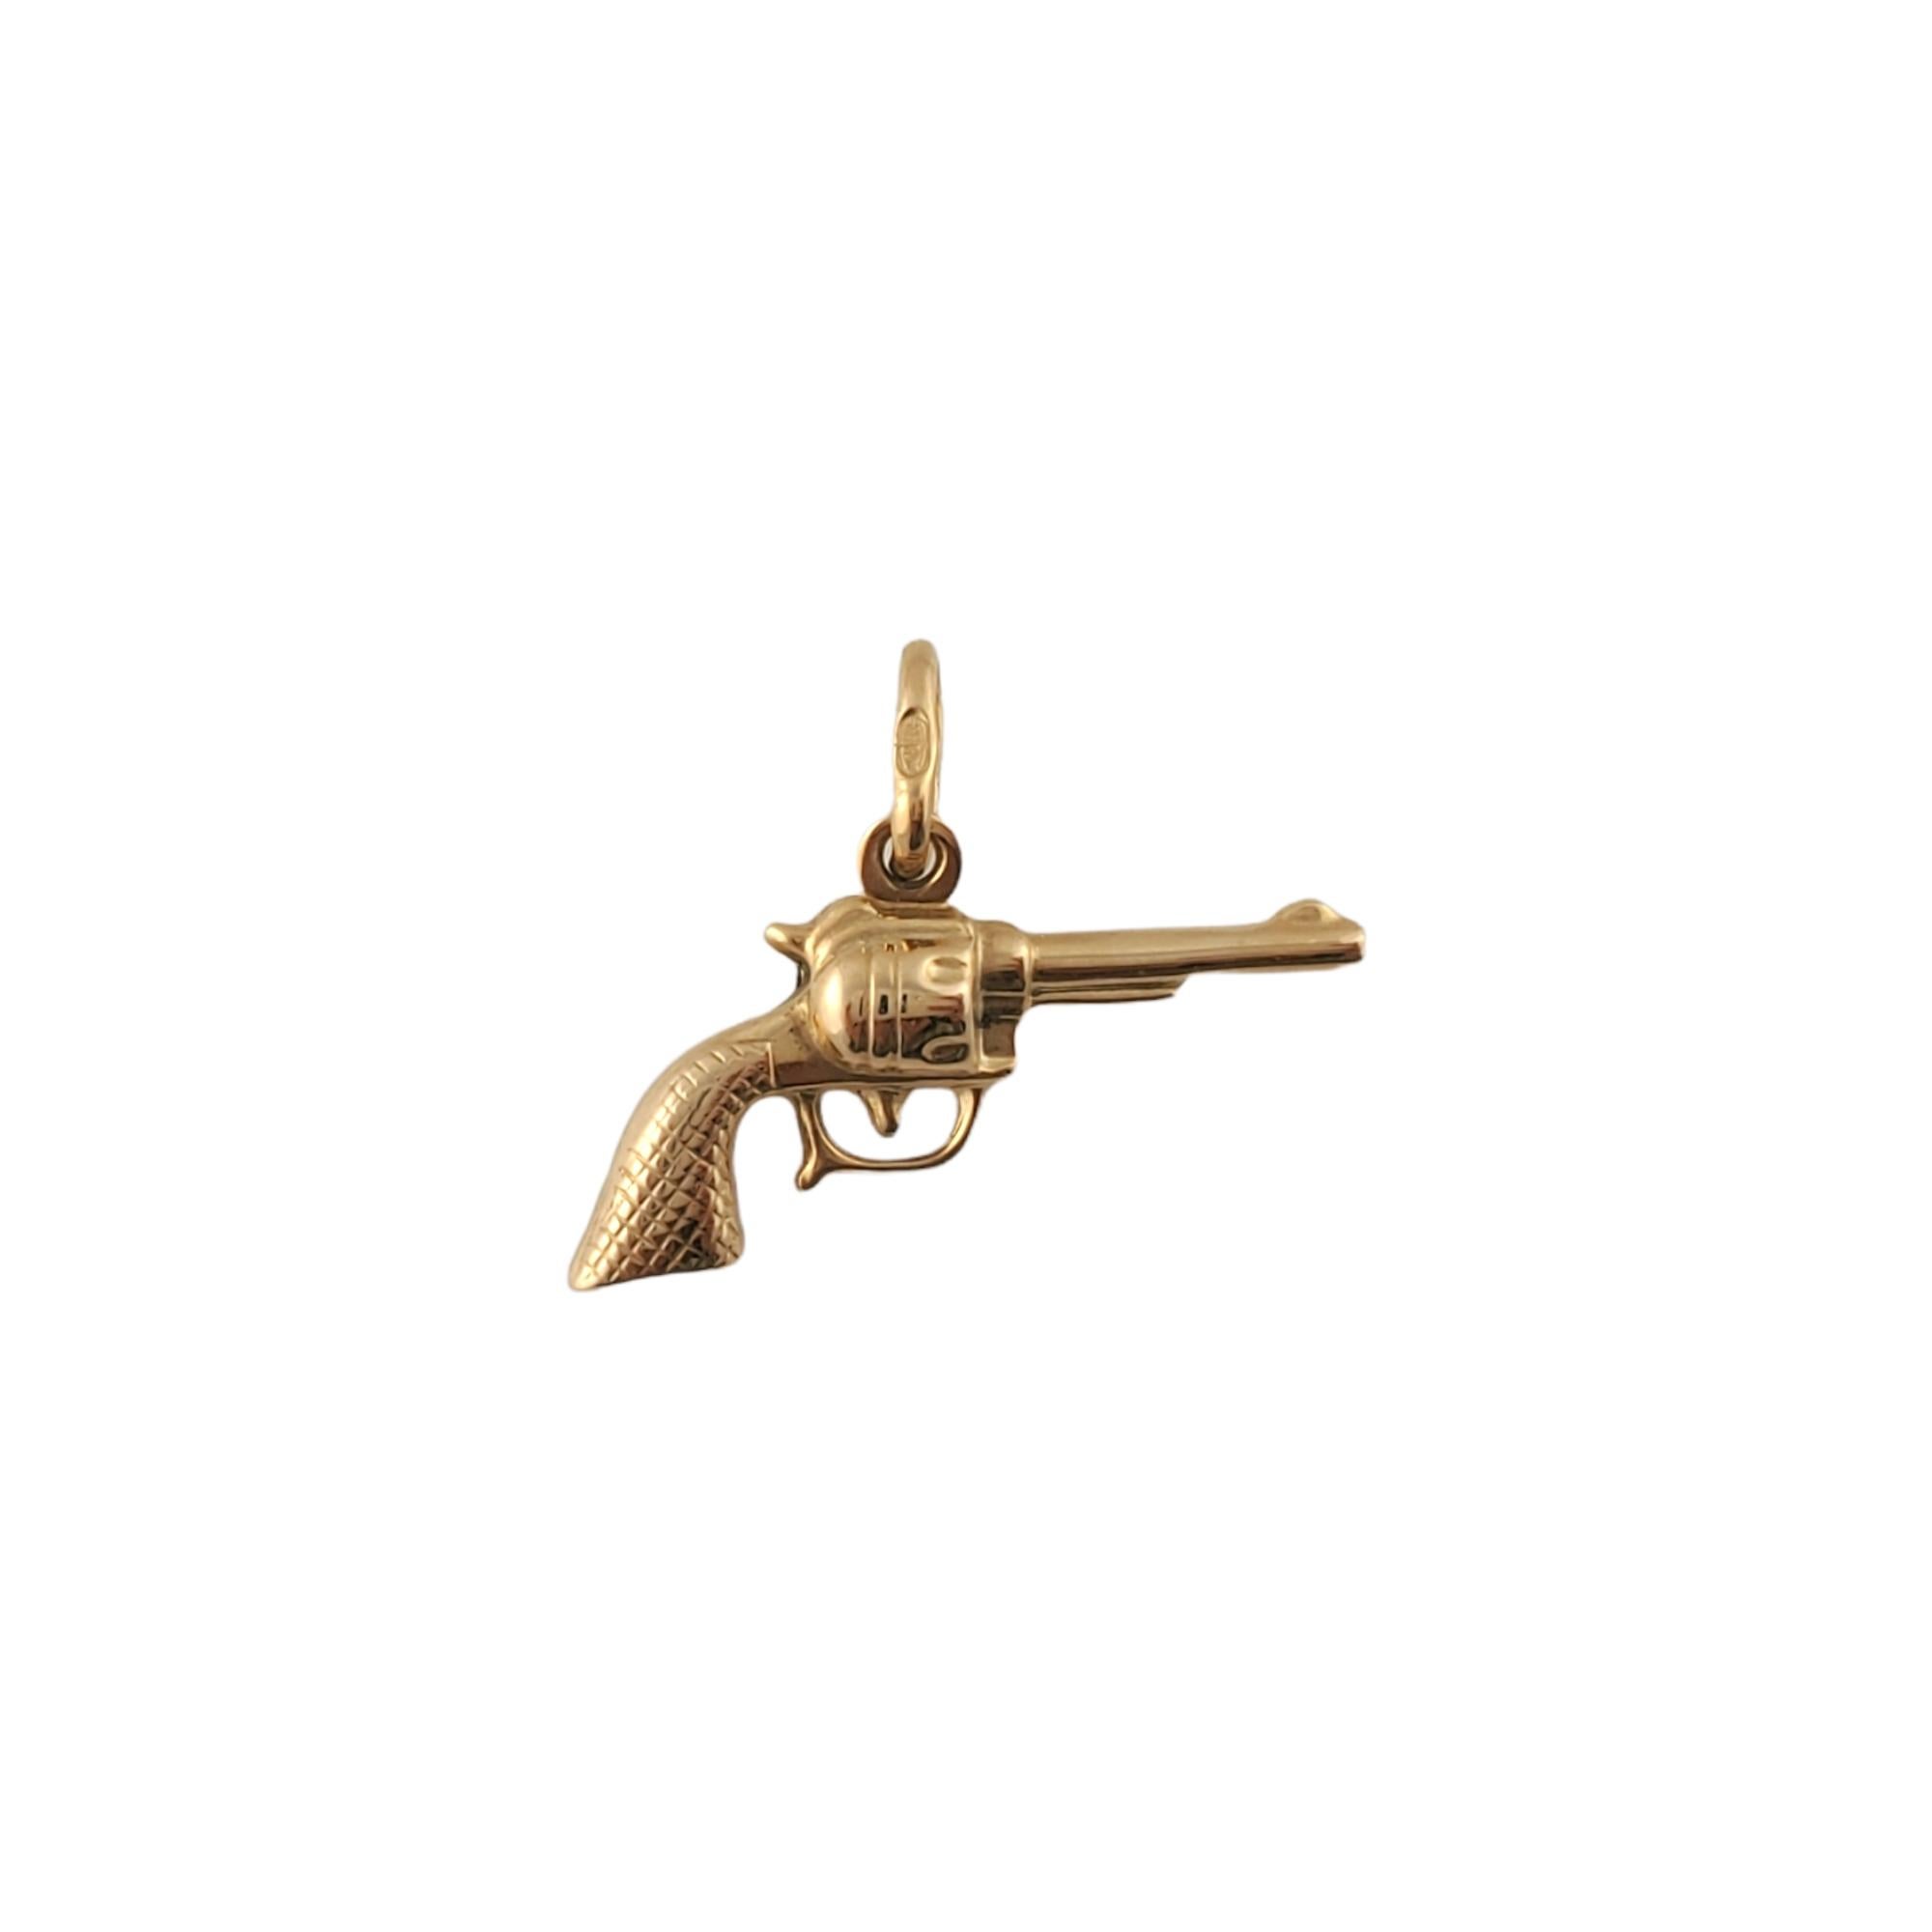 Vintage 18K Yellow Gold Revolver Gun Charm 

Meticulously detailed revolver gun charm in 18K yellow gold. 